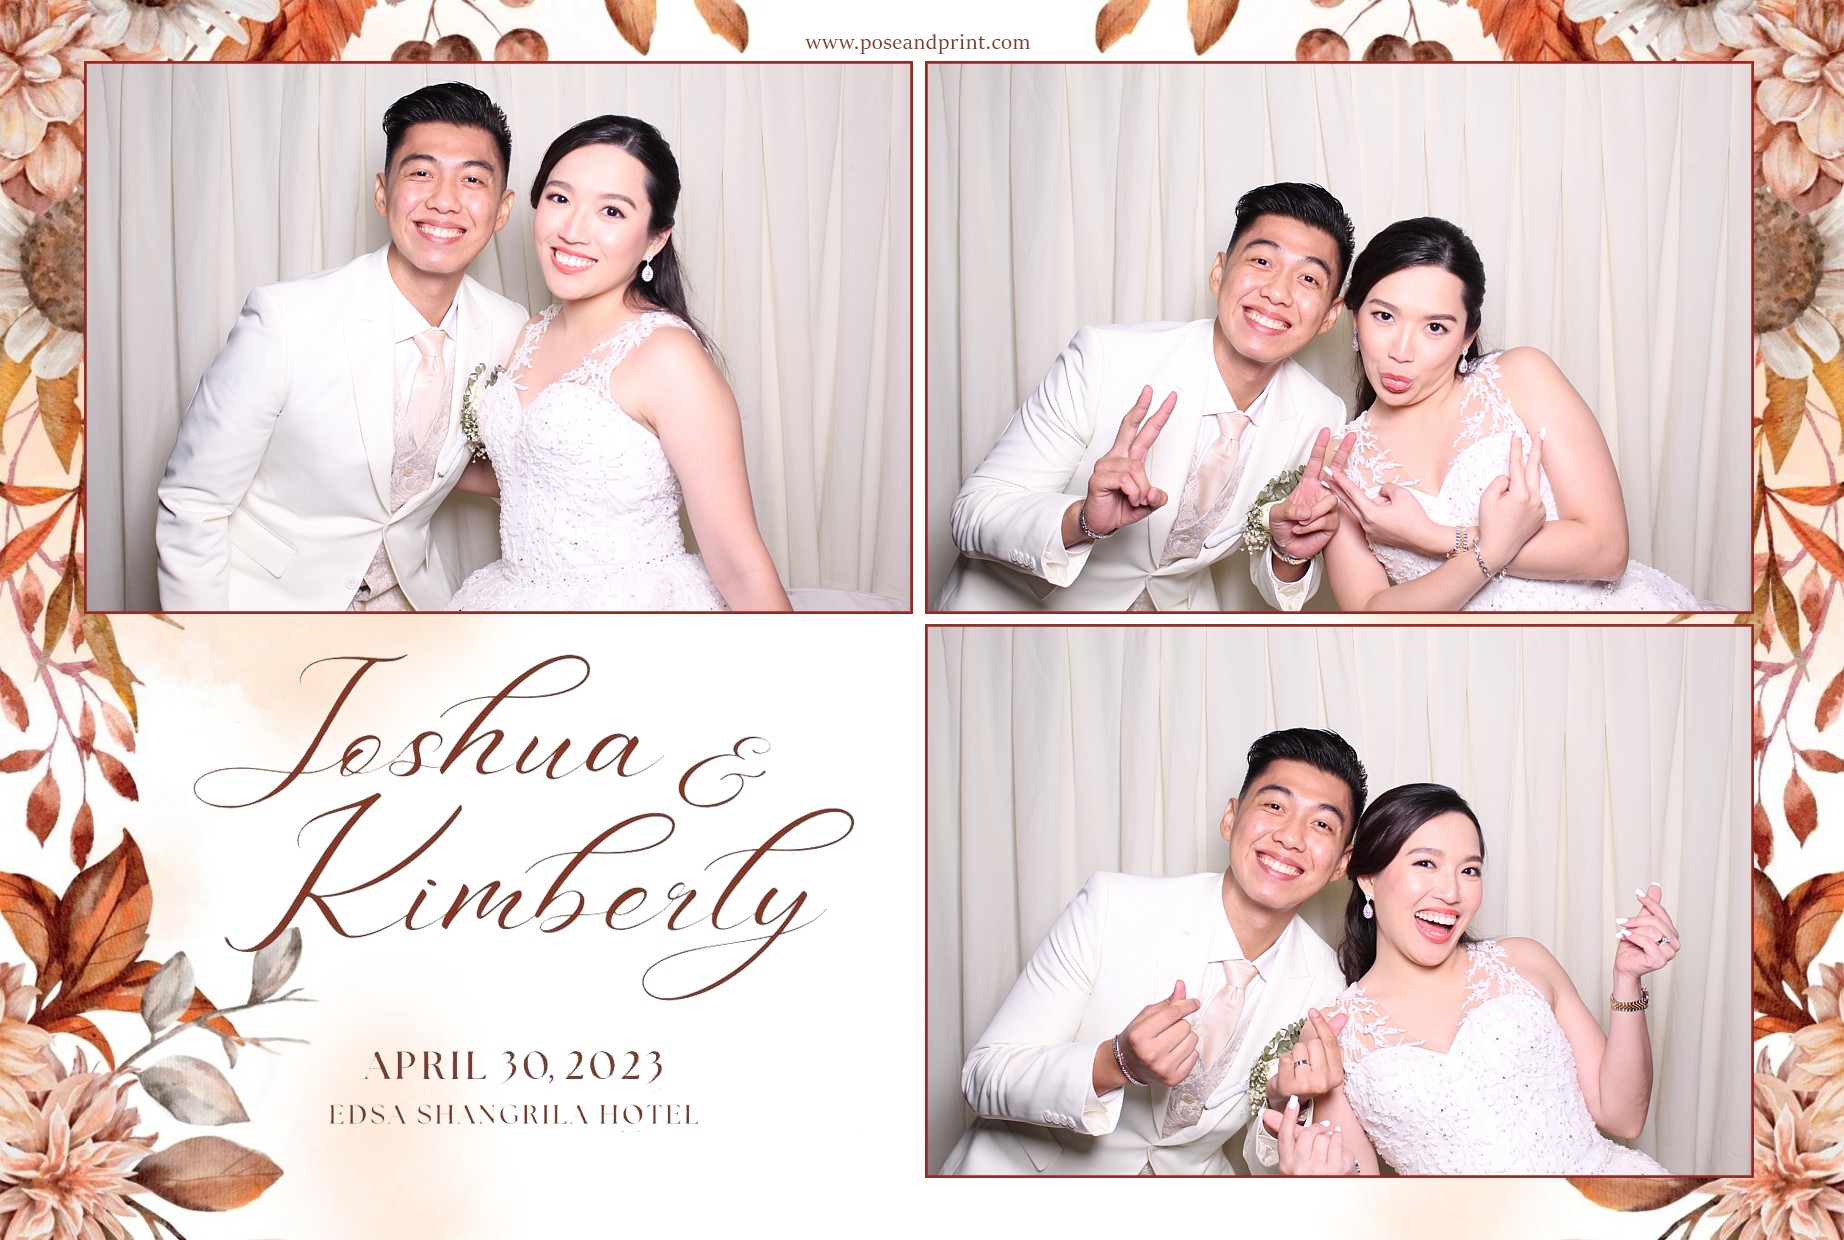 Joshua and Kimberly’s Wedding